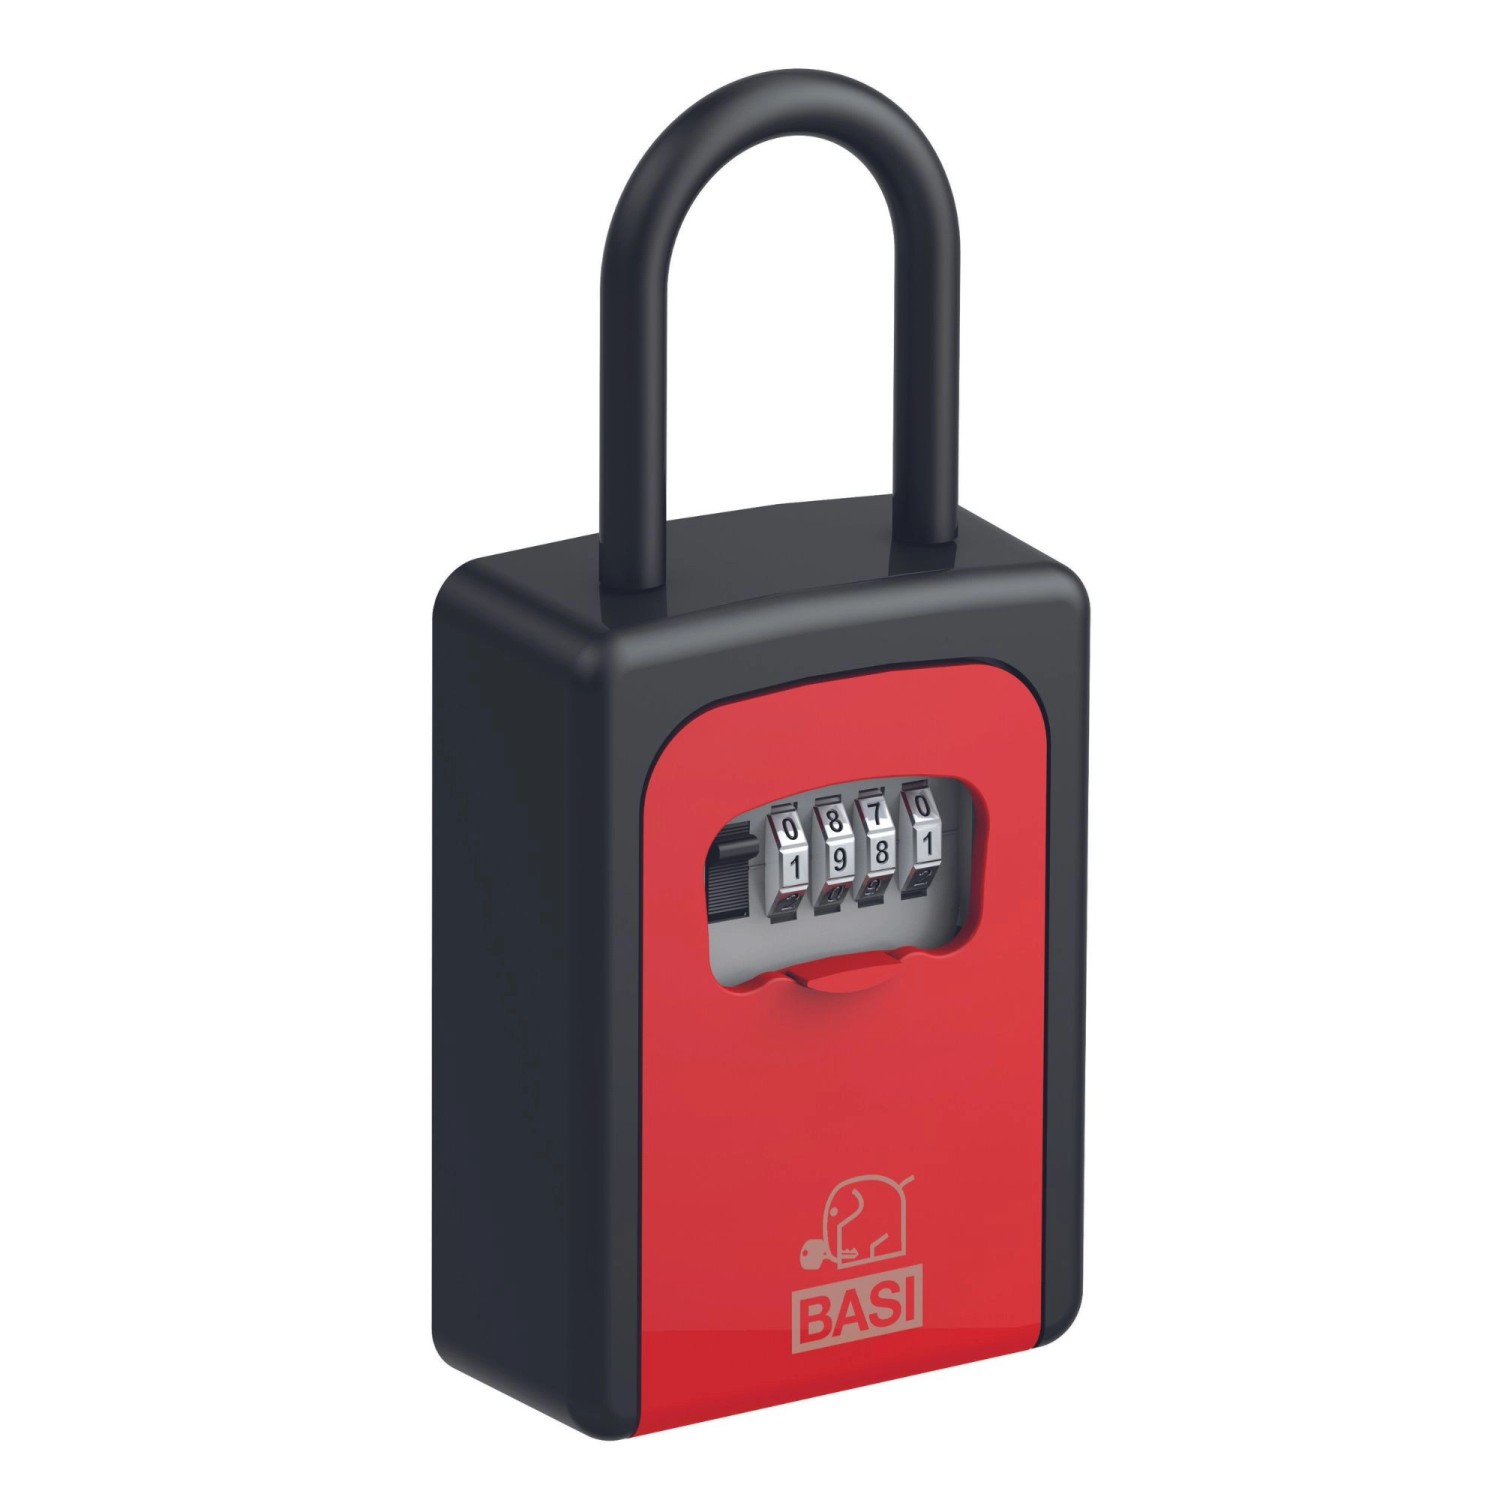 Basi - Schlüsselsafe - SSZ 200B - Schwarz-Rot - mit Zahlenschloss - Aluminium - 2101-0005-1114